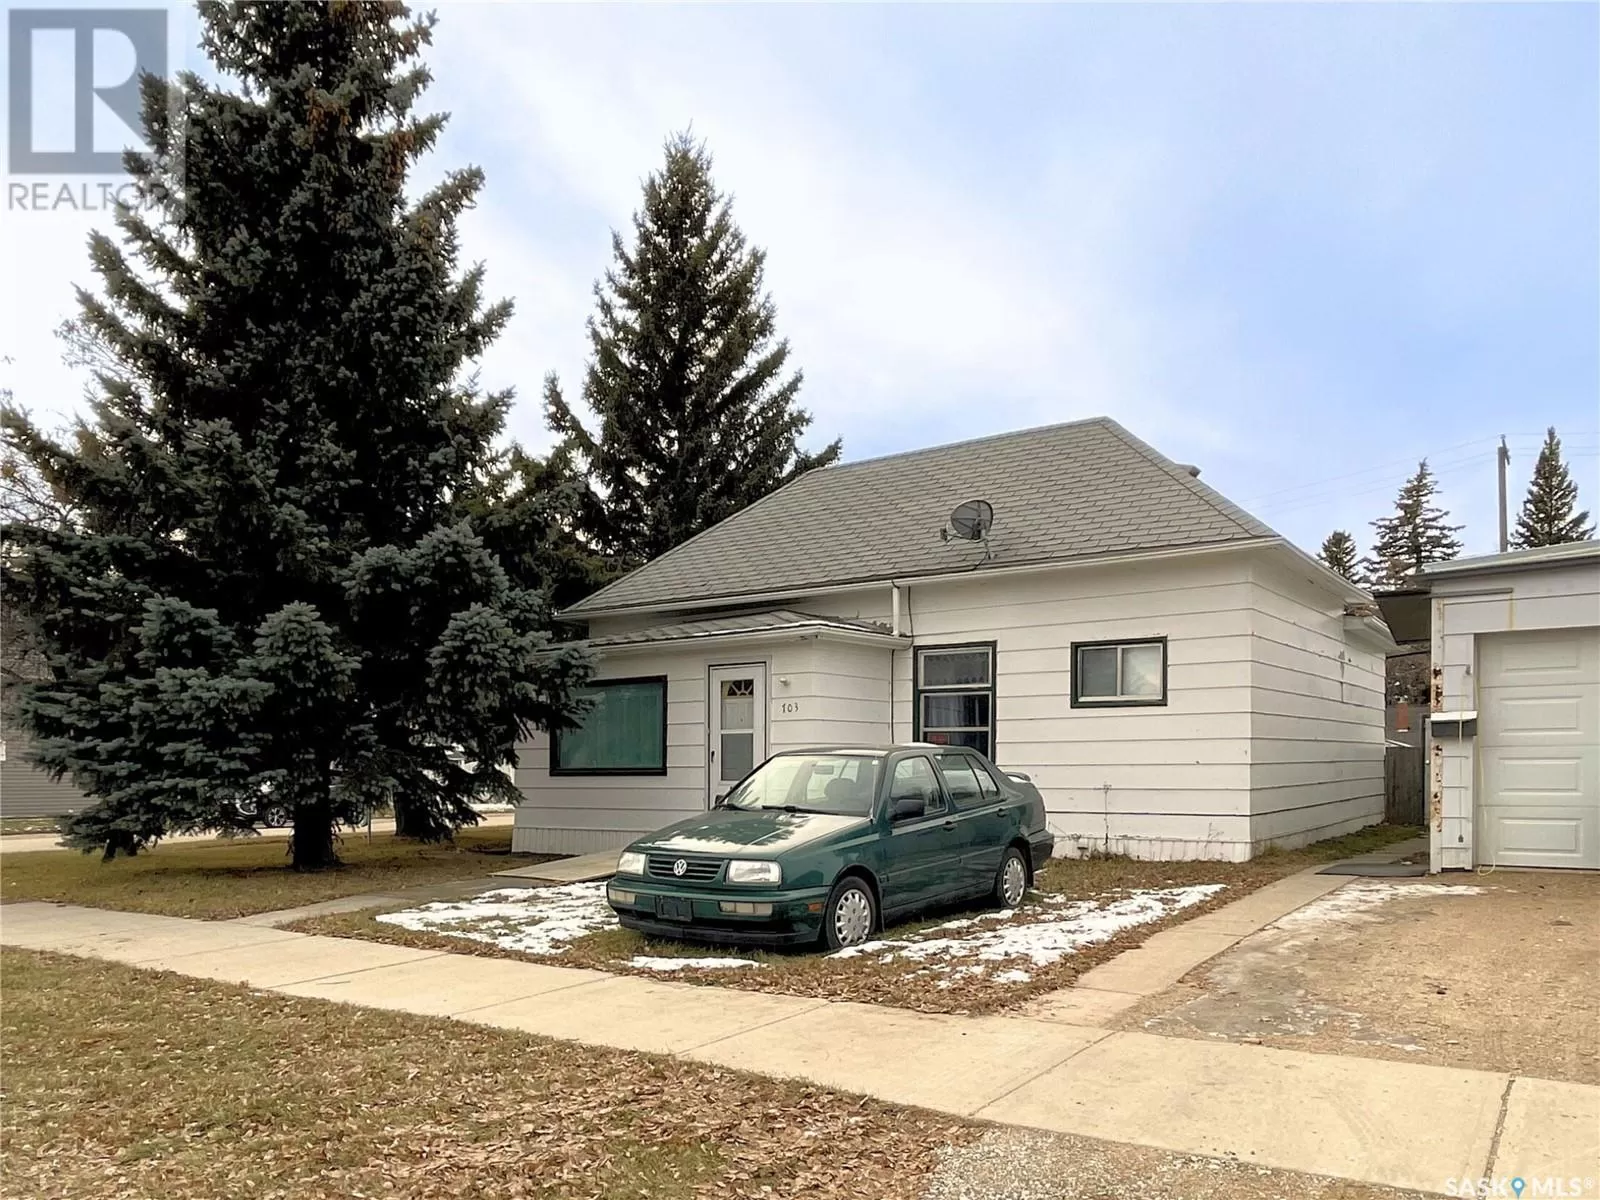 House for rent: 703 5th Street, Humboldt, Saskatchewan S0K 2A0